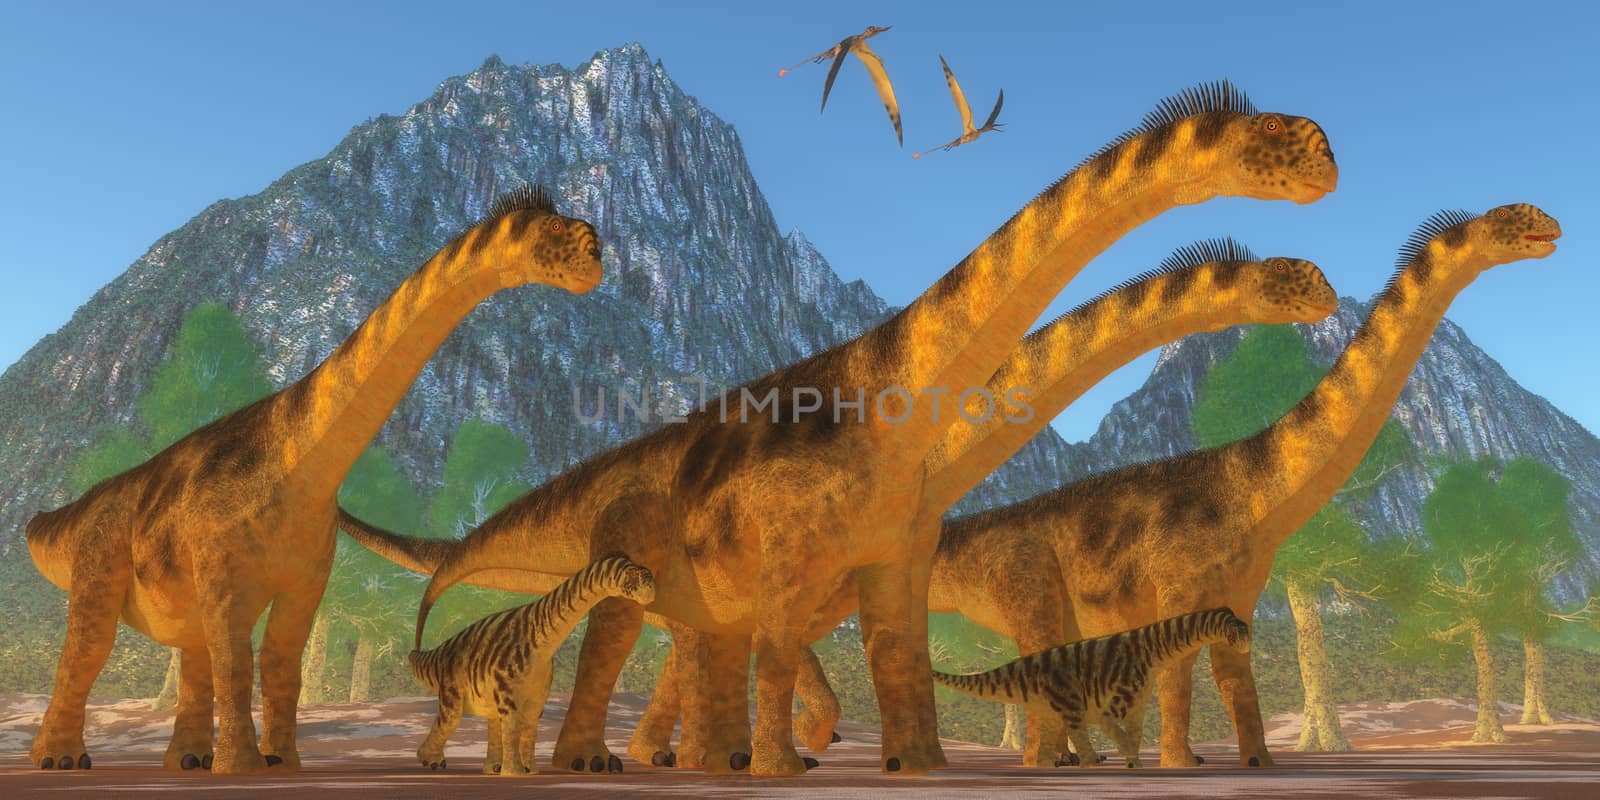 A Camarasaurus sauropod dinosaur herd keep watch on their offspring as two Rhamphorhynchus reptiles fly over.